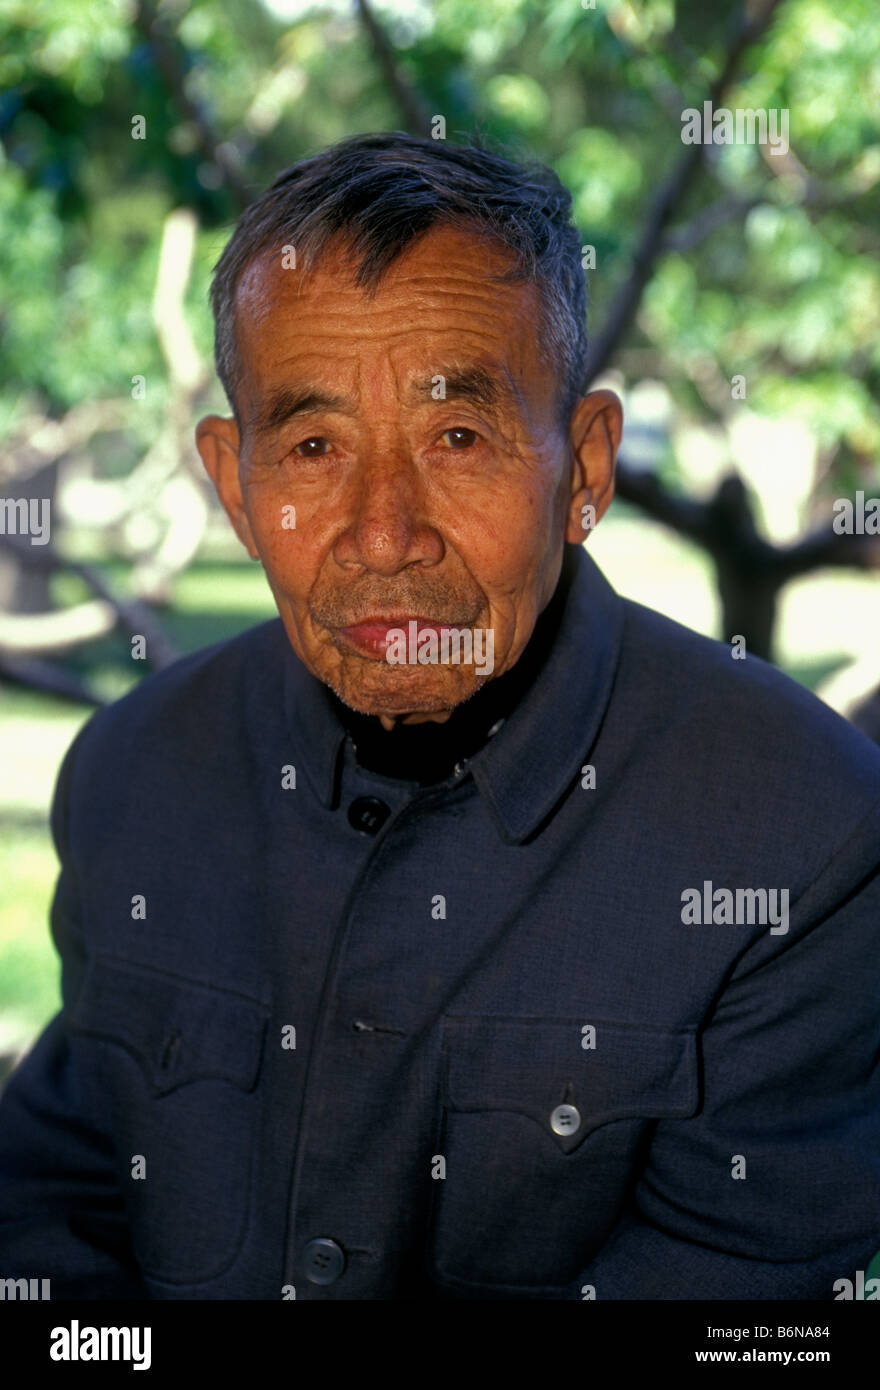 1, one, Chinese people, Chinese man, Chinese, man, adult man, old man, elderly man, Beijing, Beijing Municipality, China, Asia Stock Photo